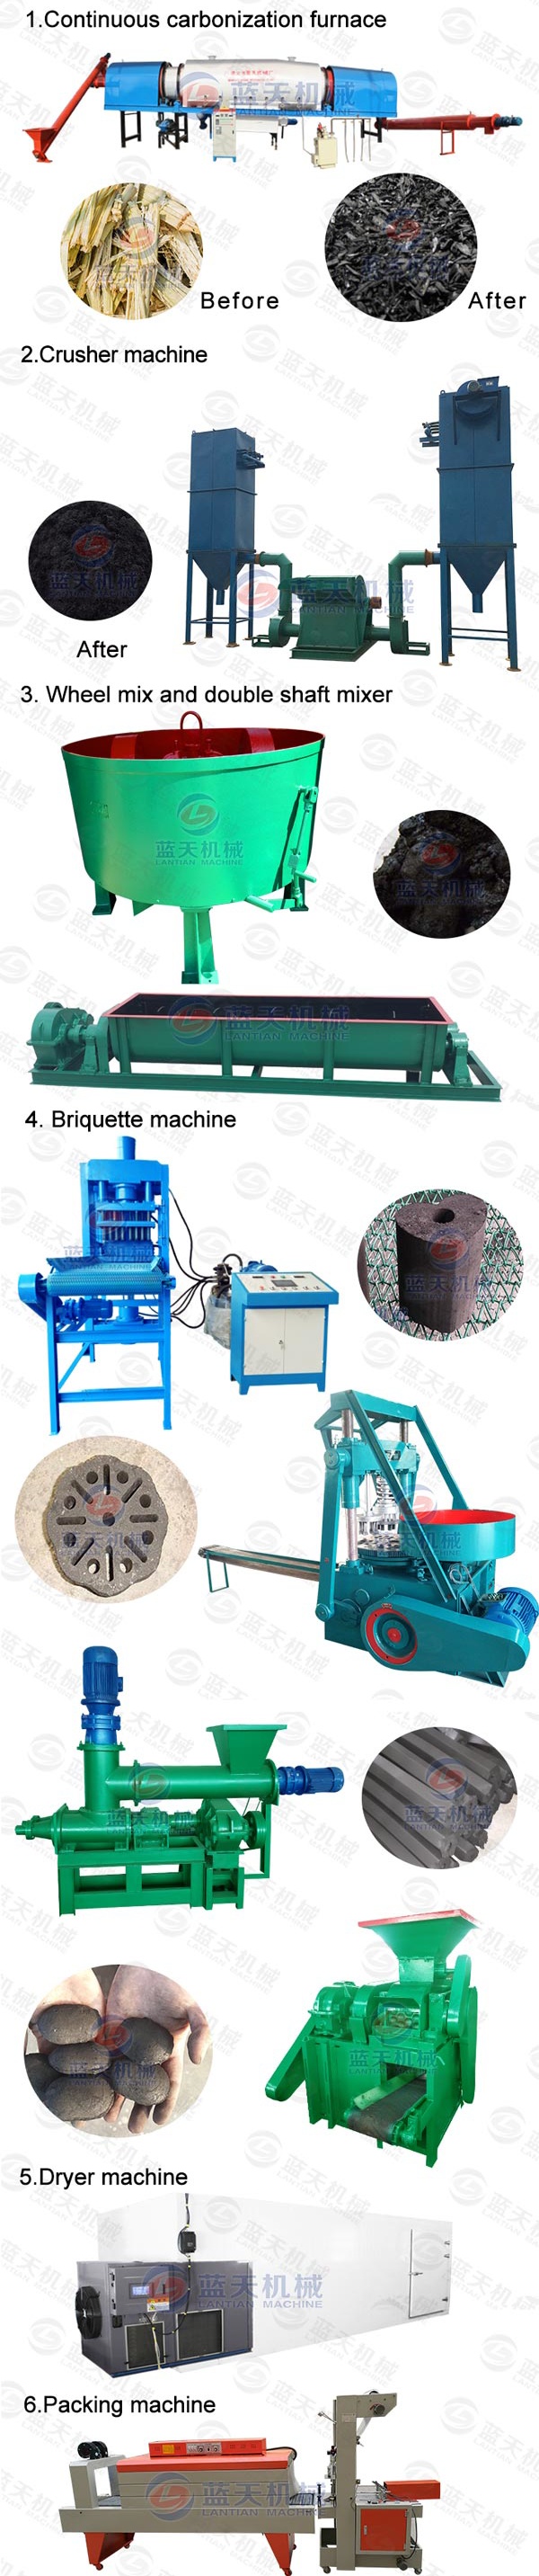 Product line of charcoal briquette dryer